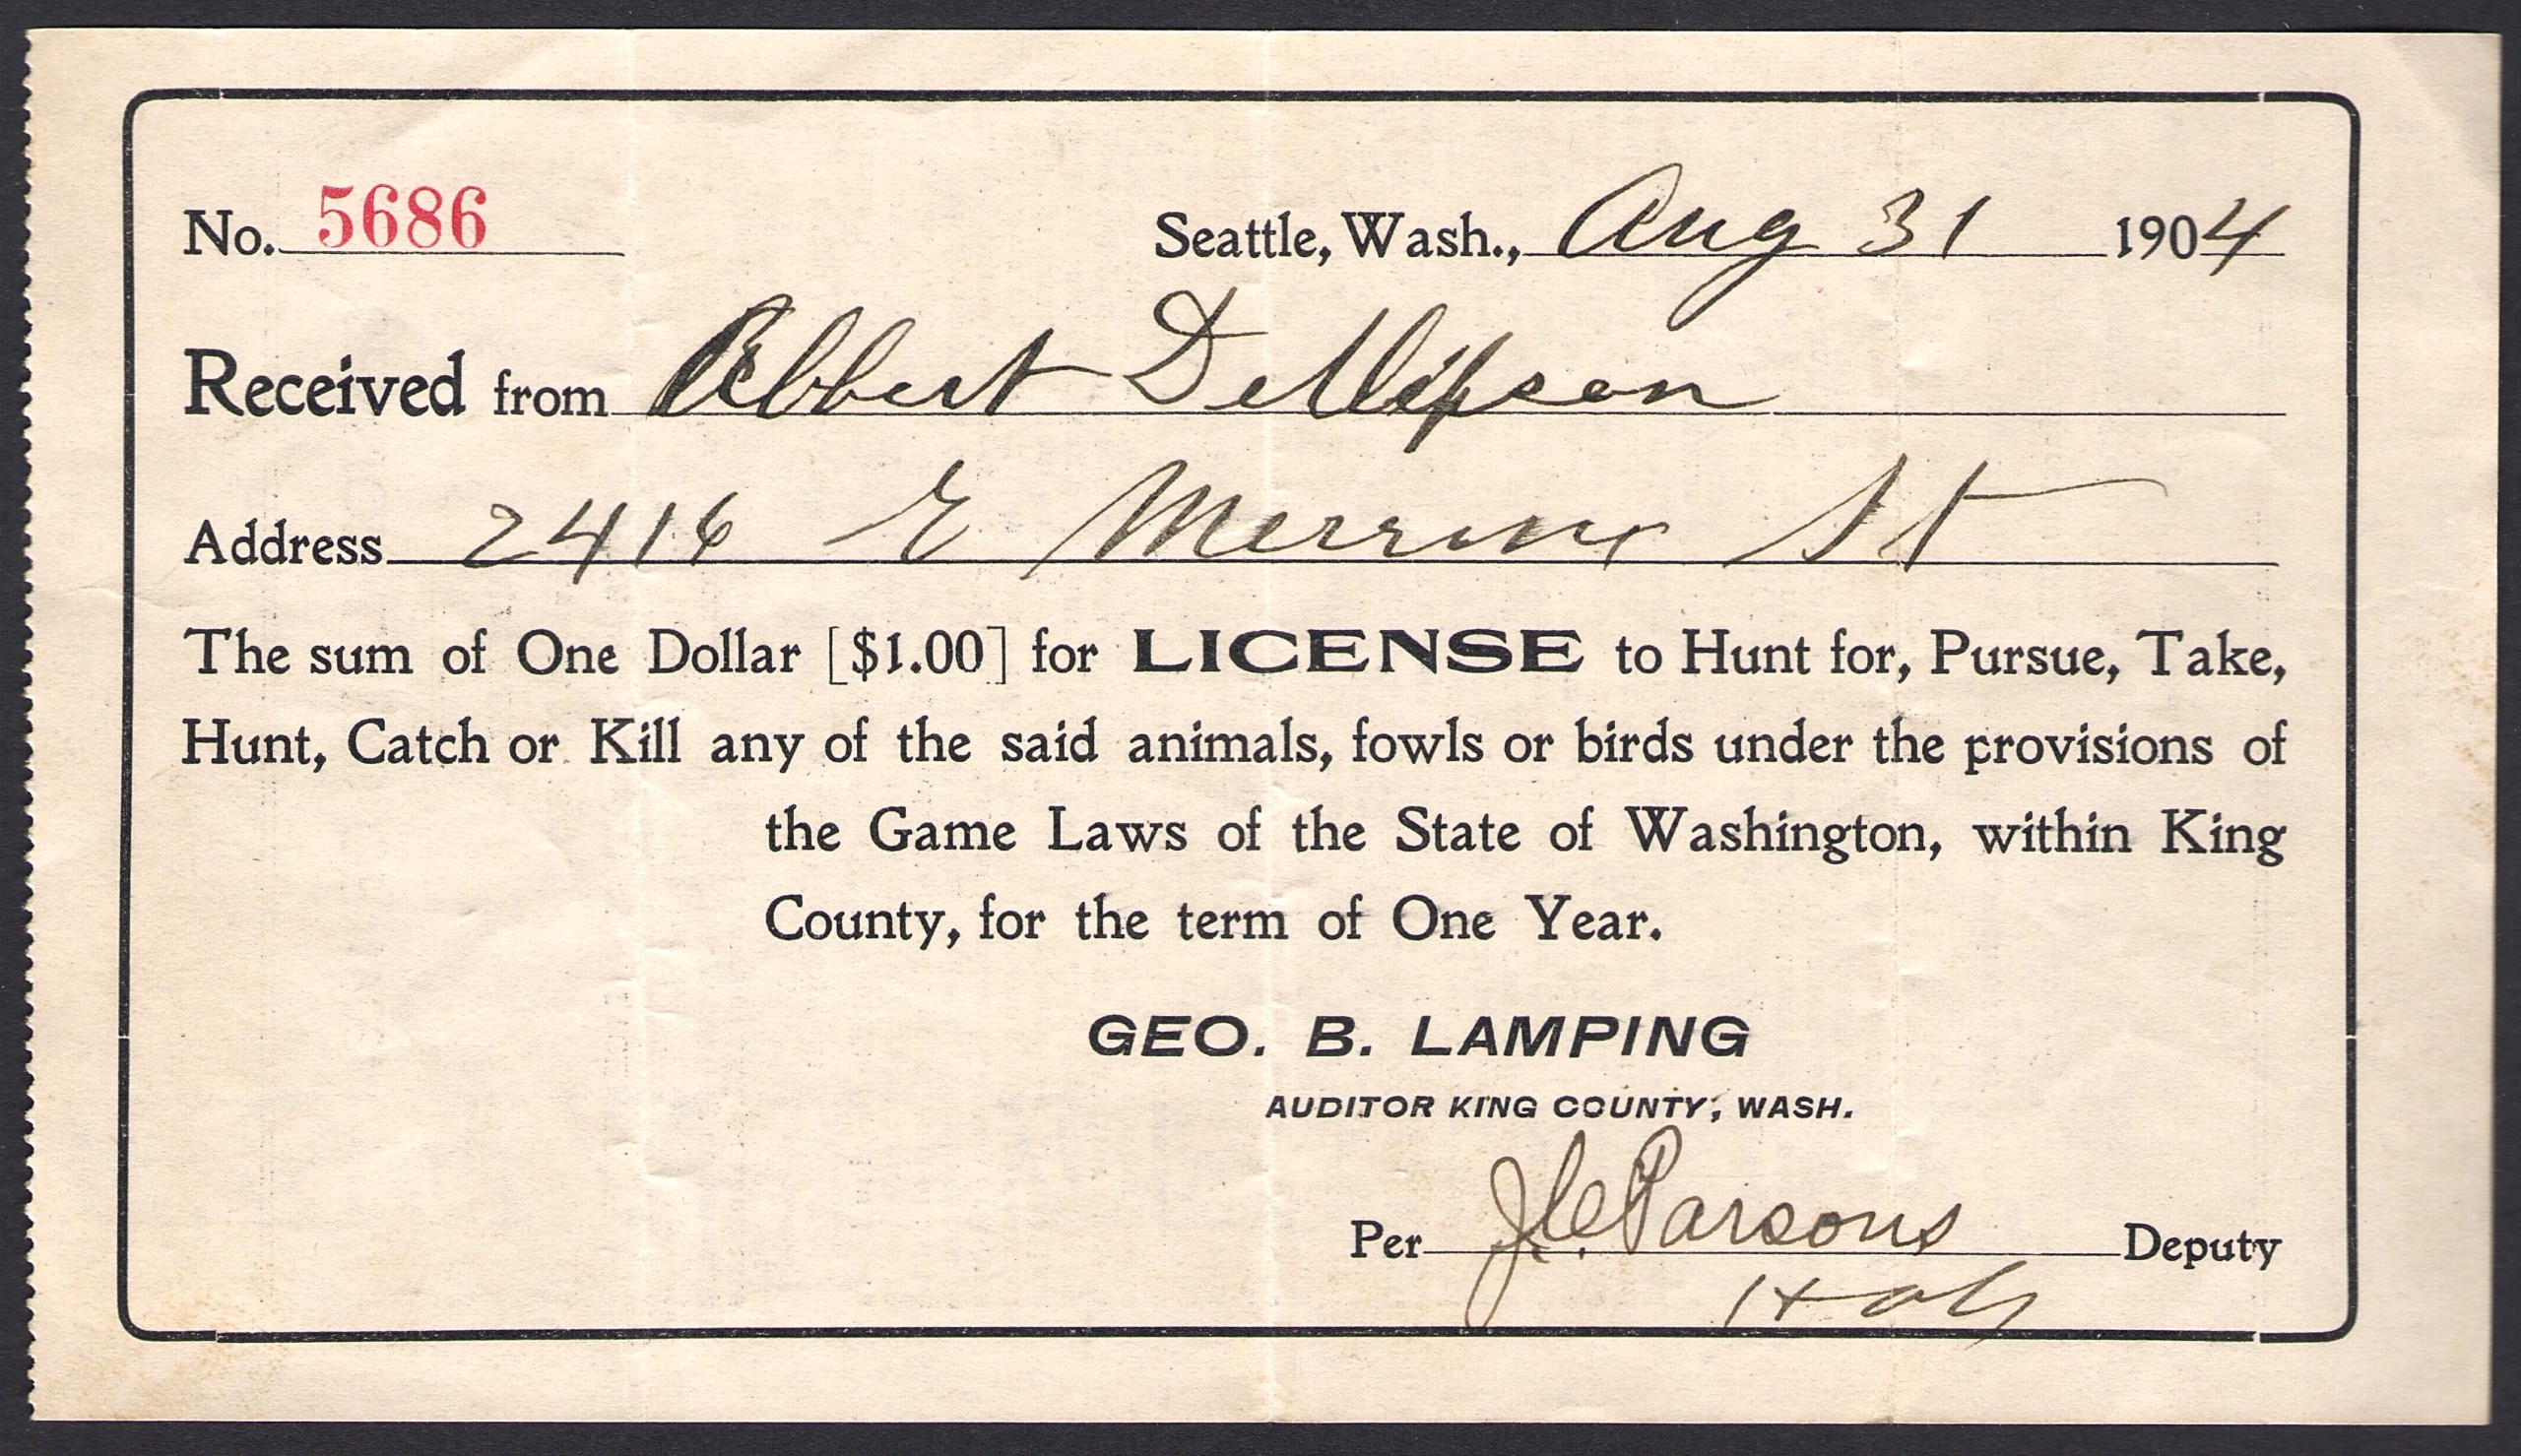 1904 King County, Washington Hunting License (Paper Portion)